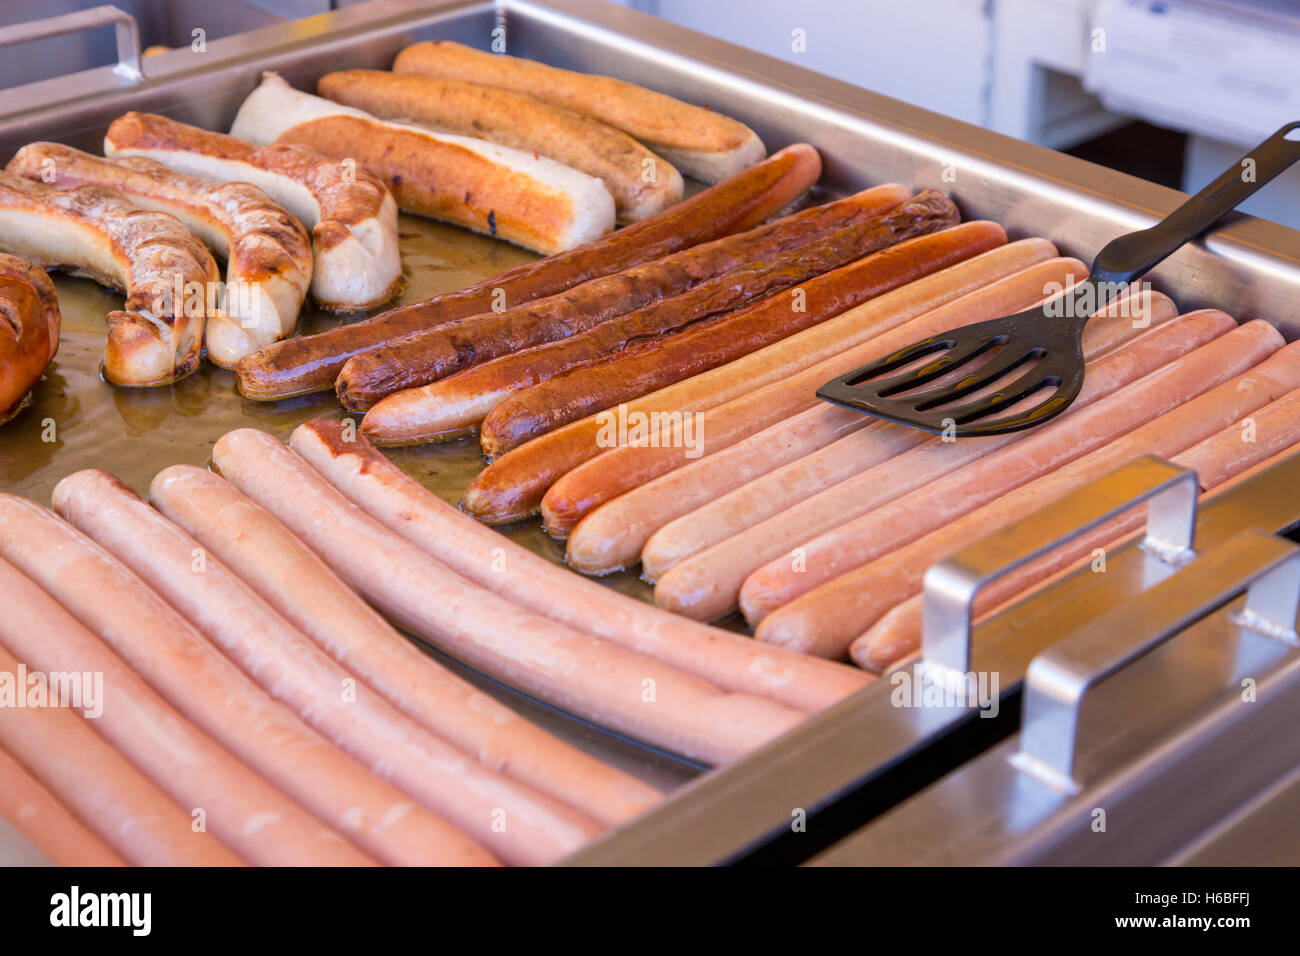 German Wurst sausages for sale on a market stall, Freiburg im Breisgau, Germany Stock Photo